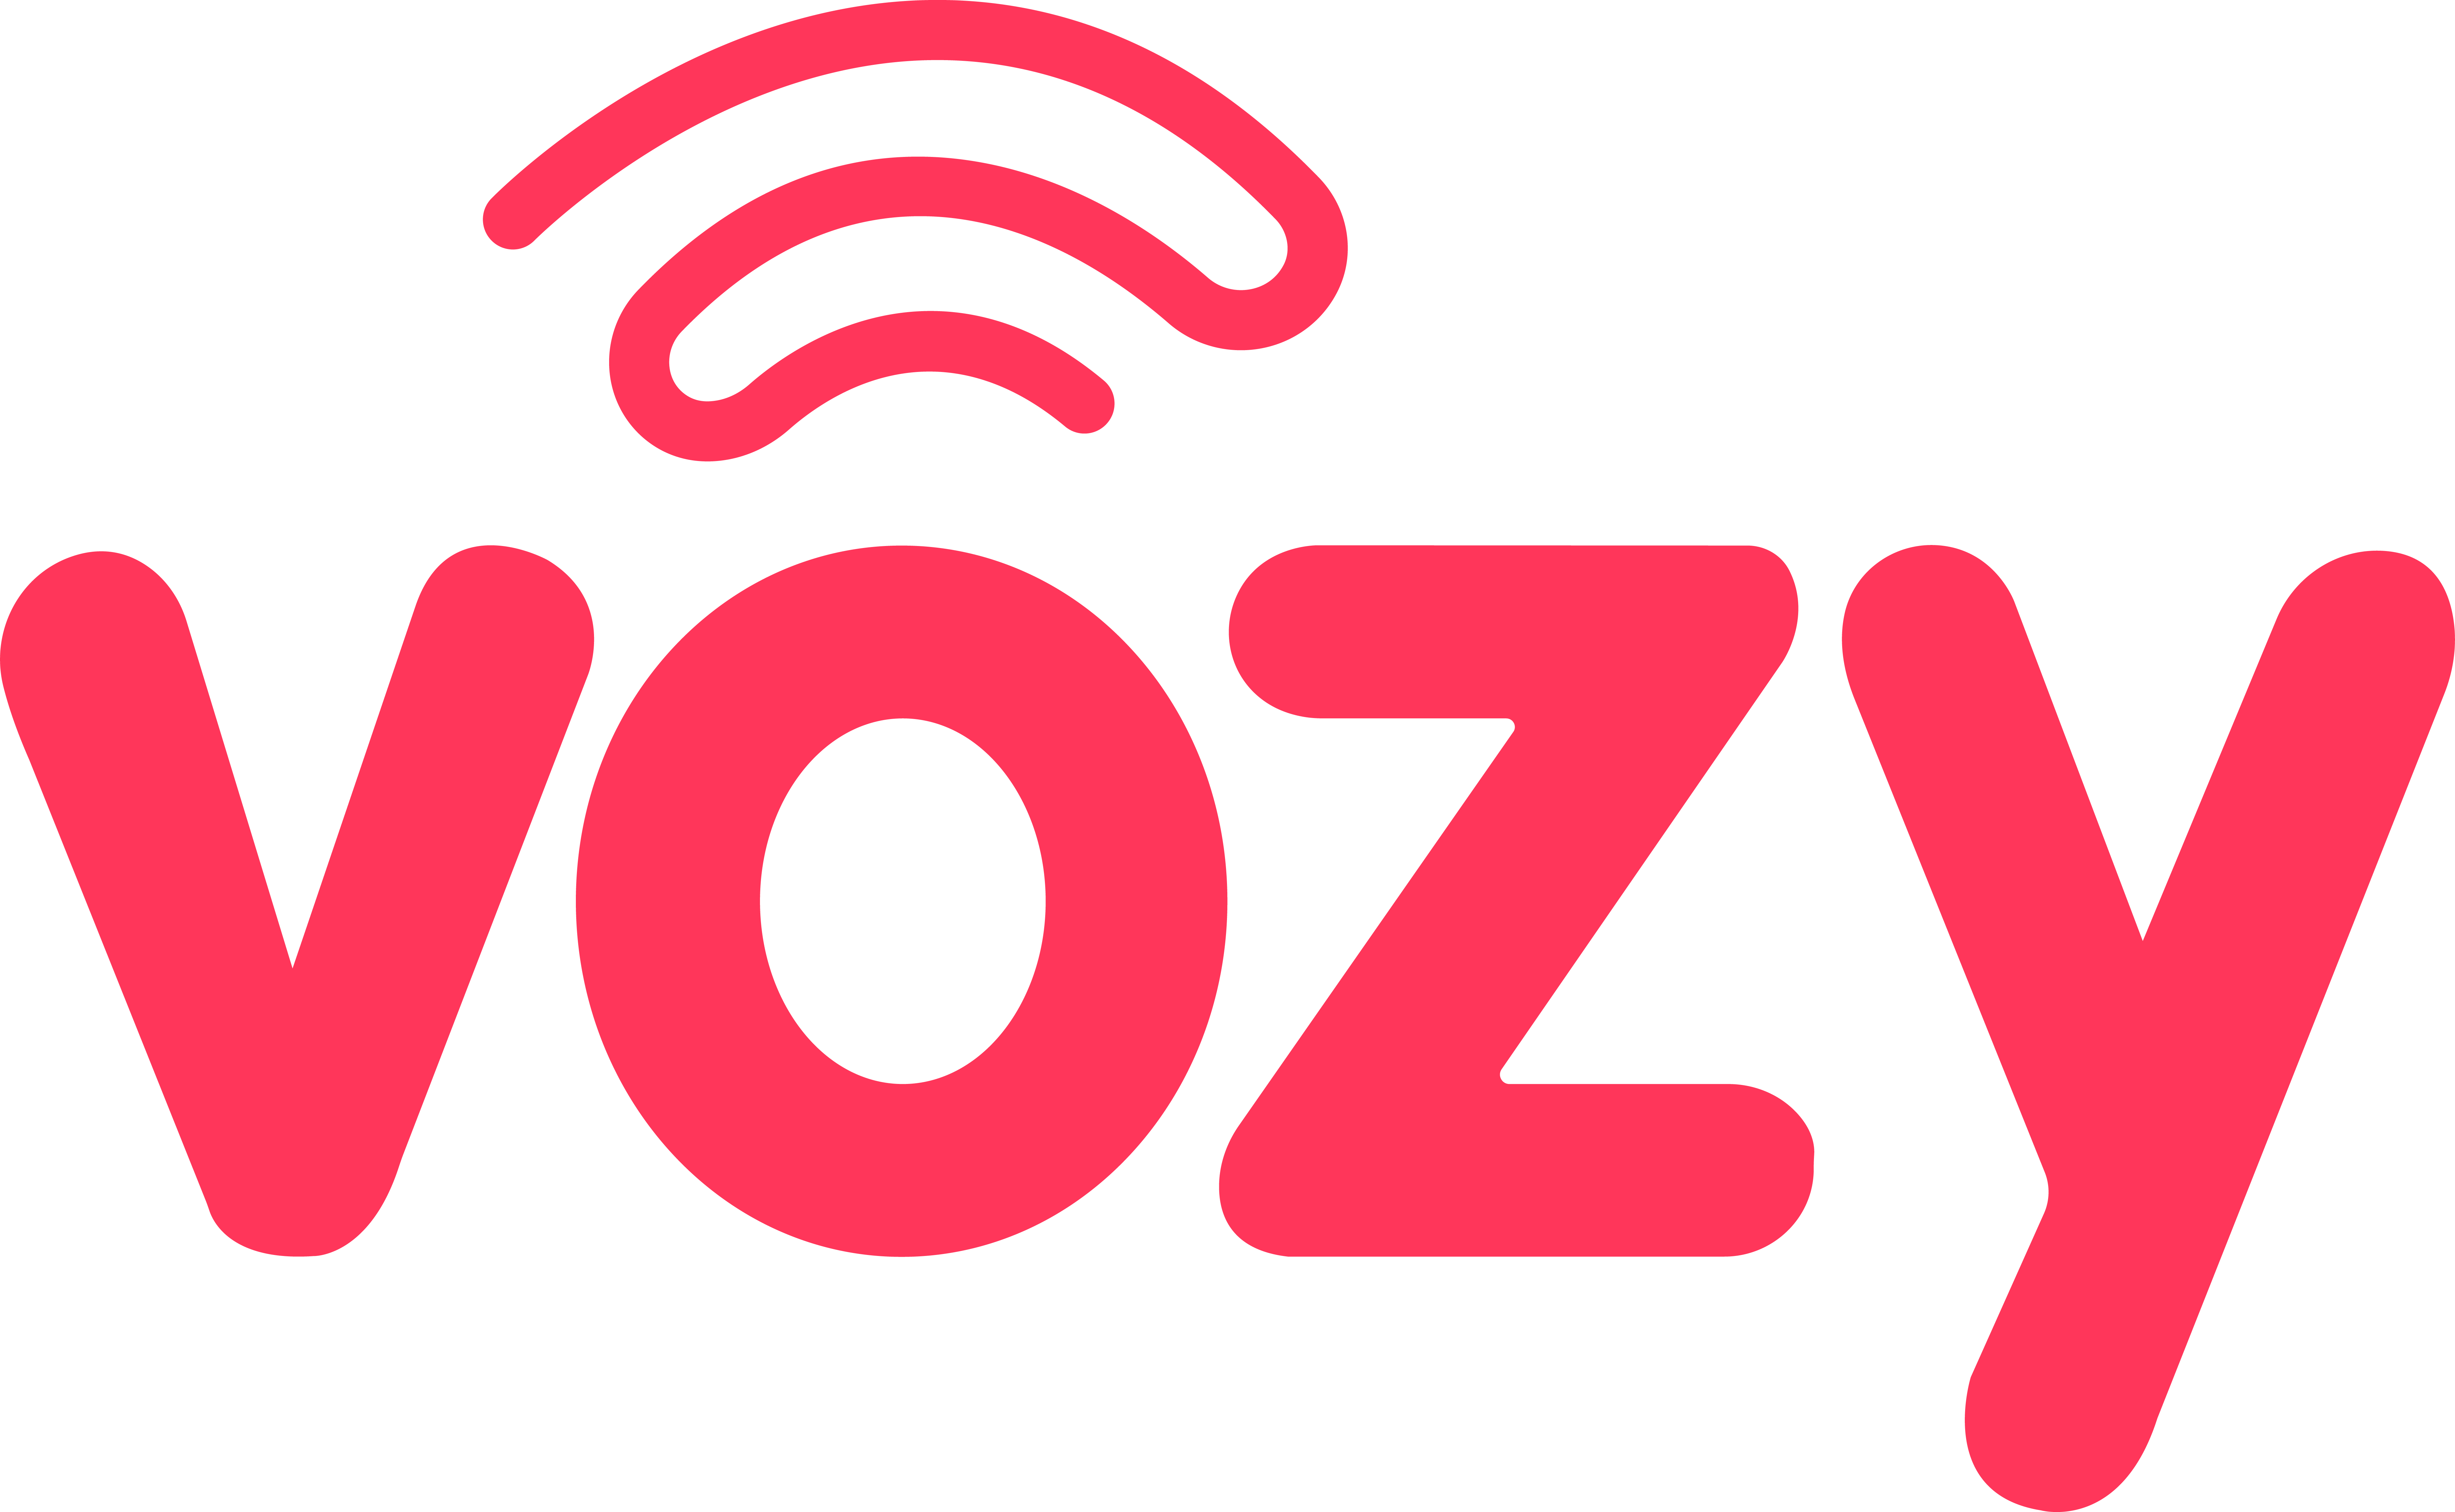 Vozy Cloud Phone System